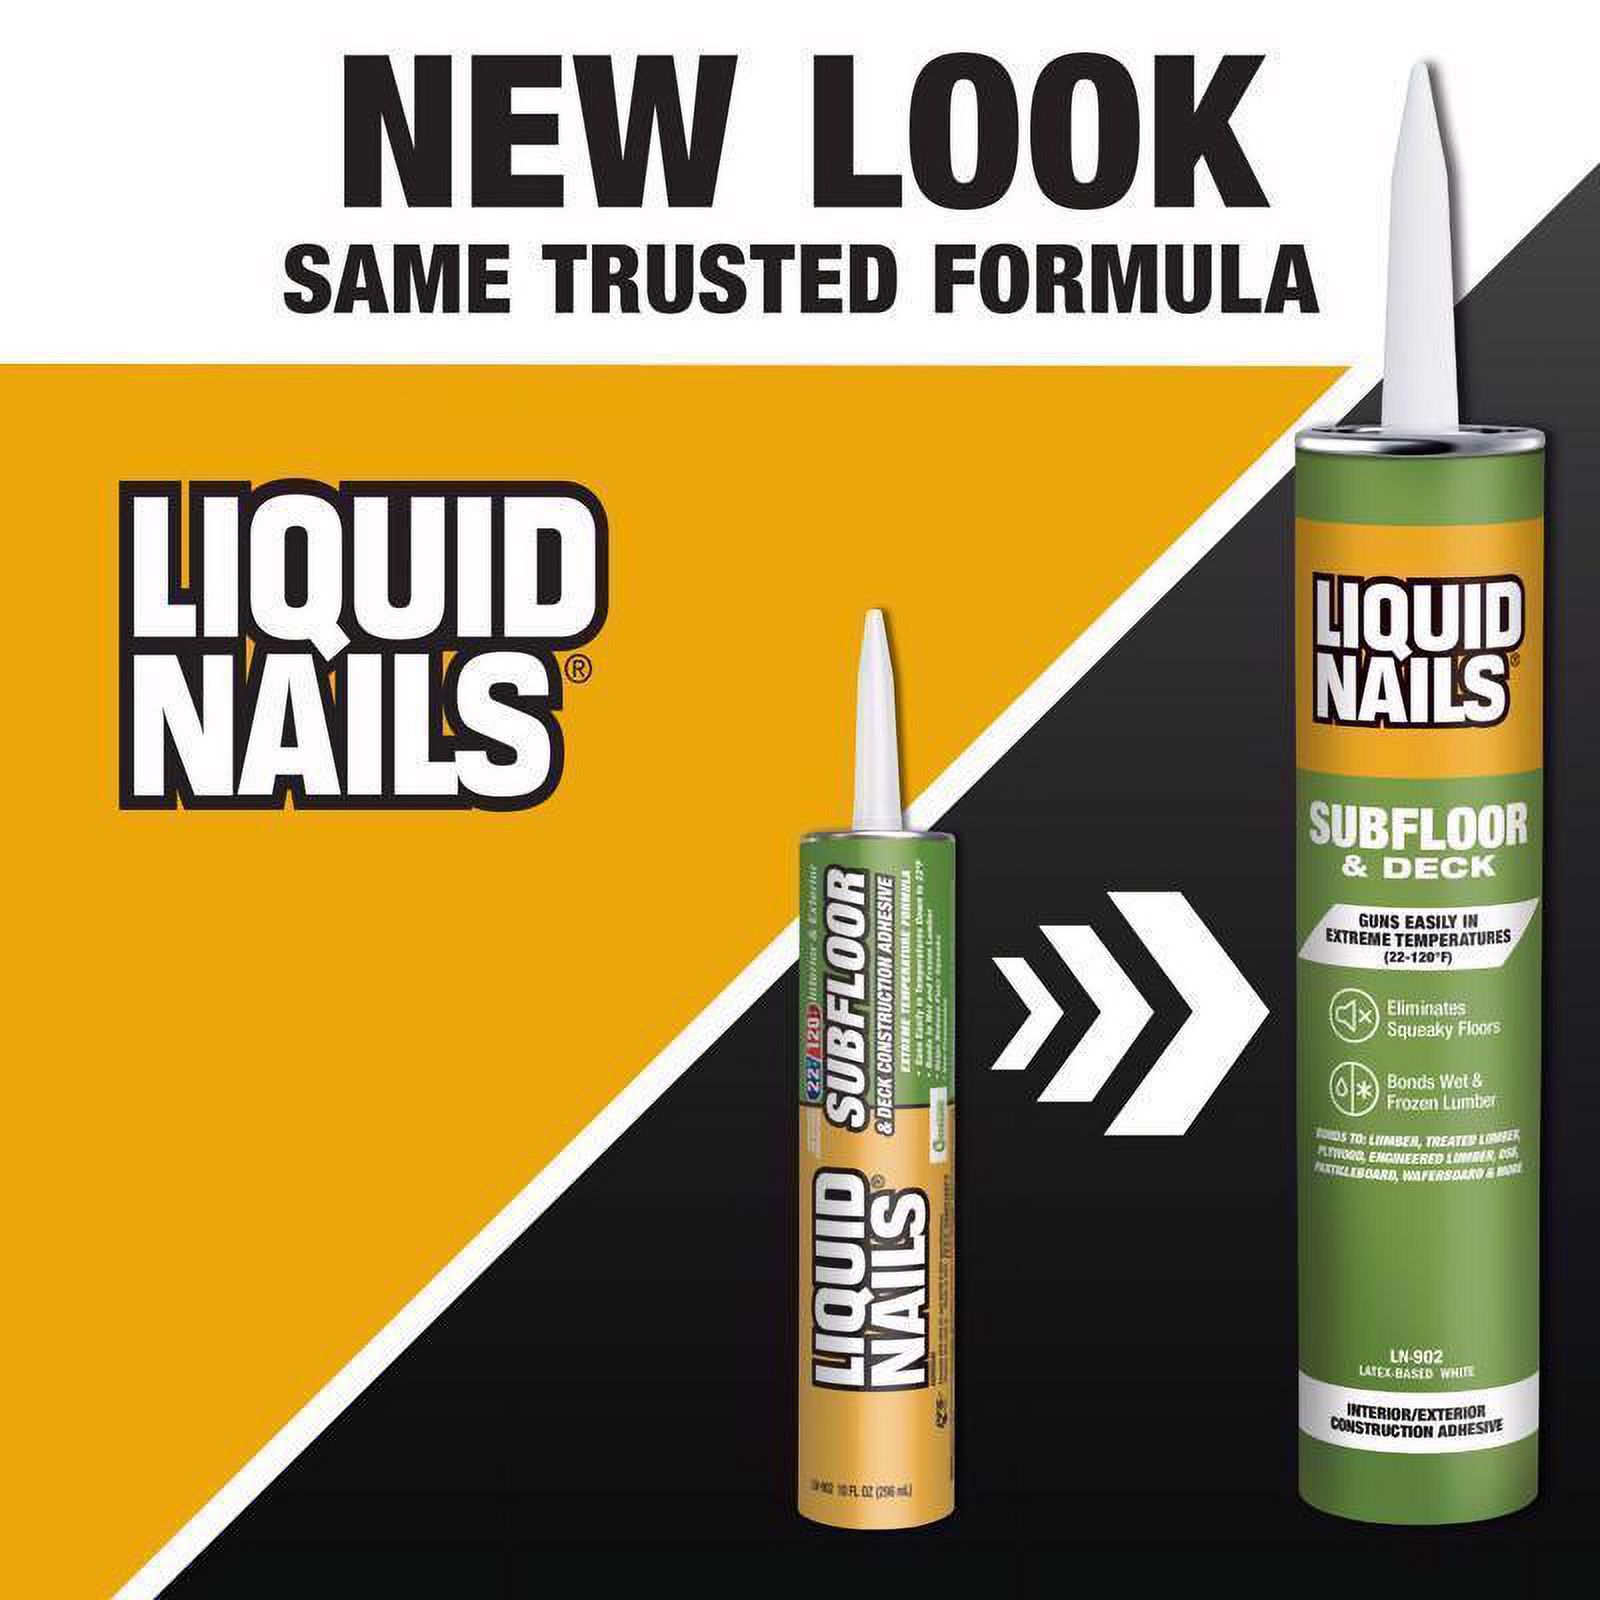 Liquid Nails Adhesive LN902 VOC 10.1 oz Subfloors and Construction Adhesive - image 4 of 7